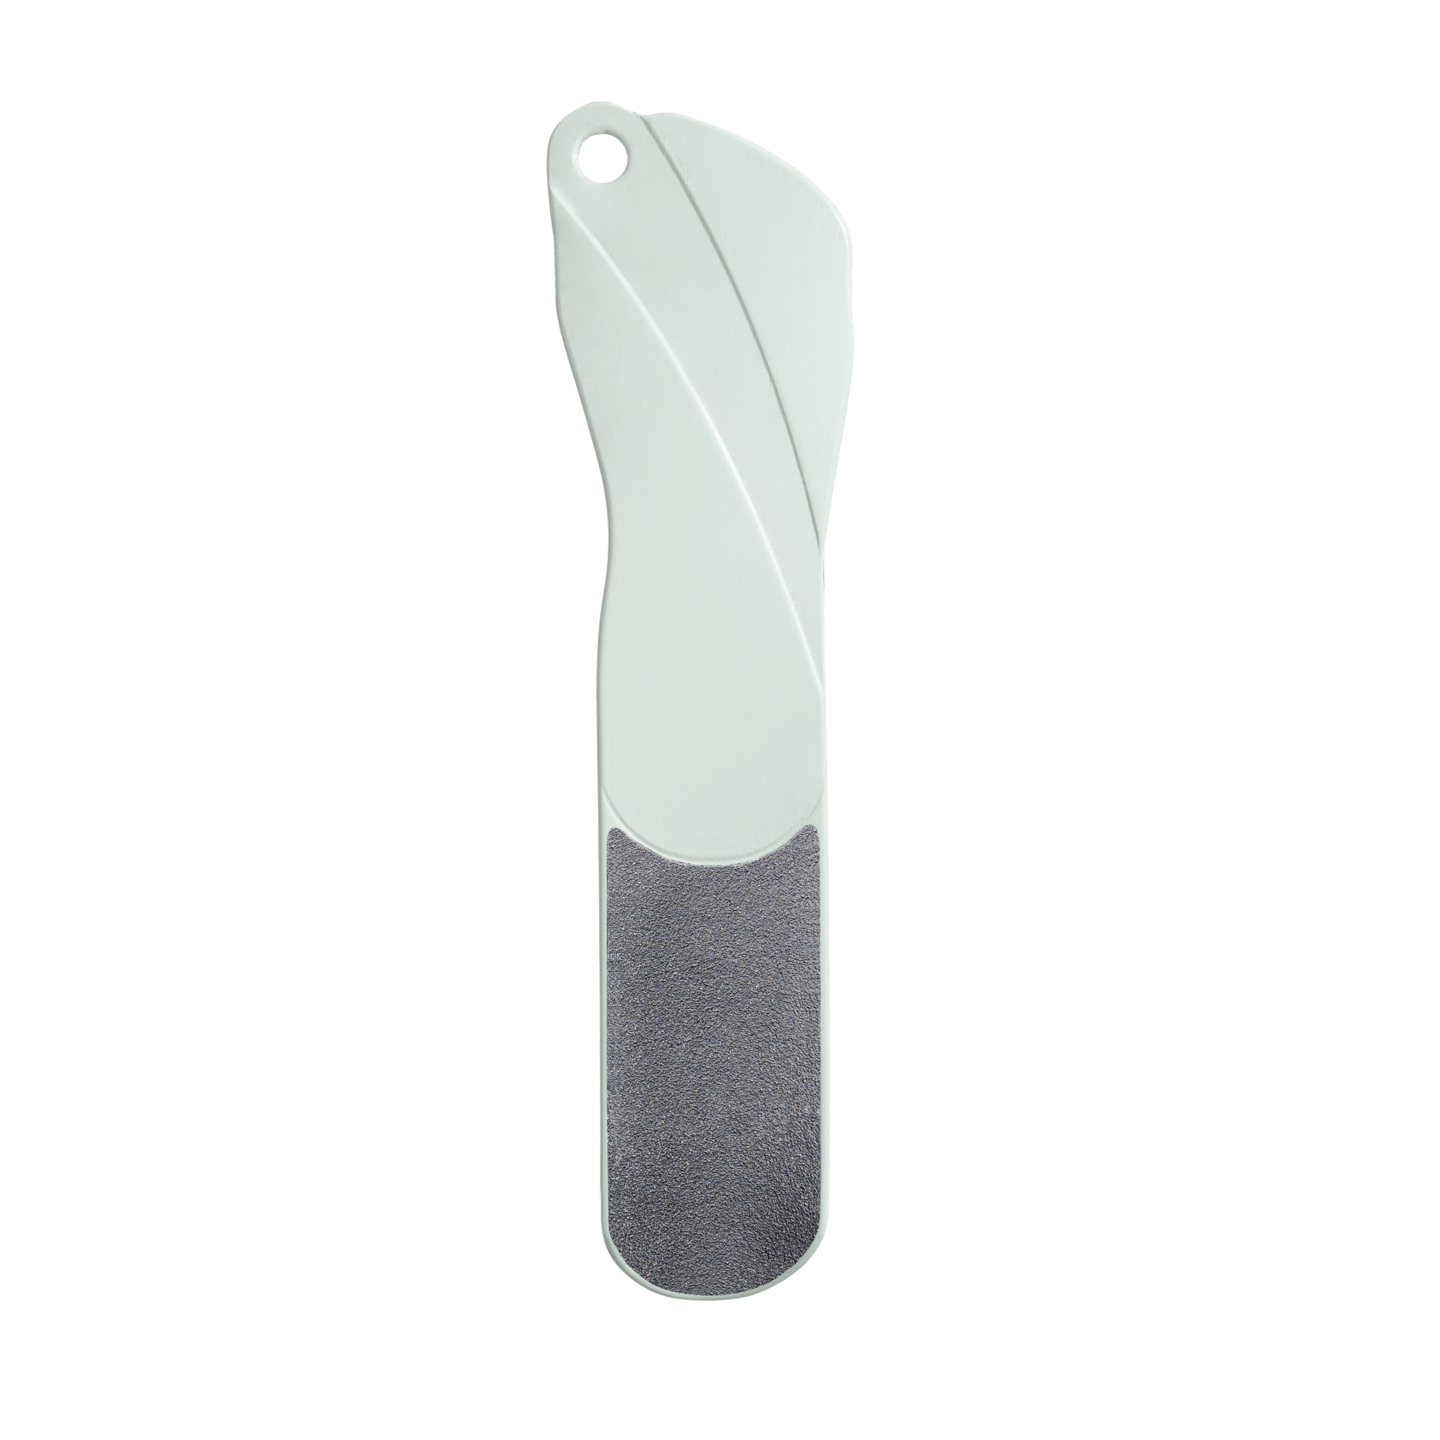 RUCK - Fußfeile, unbedruckt, Kunststoff, 20 cm in pastell mint